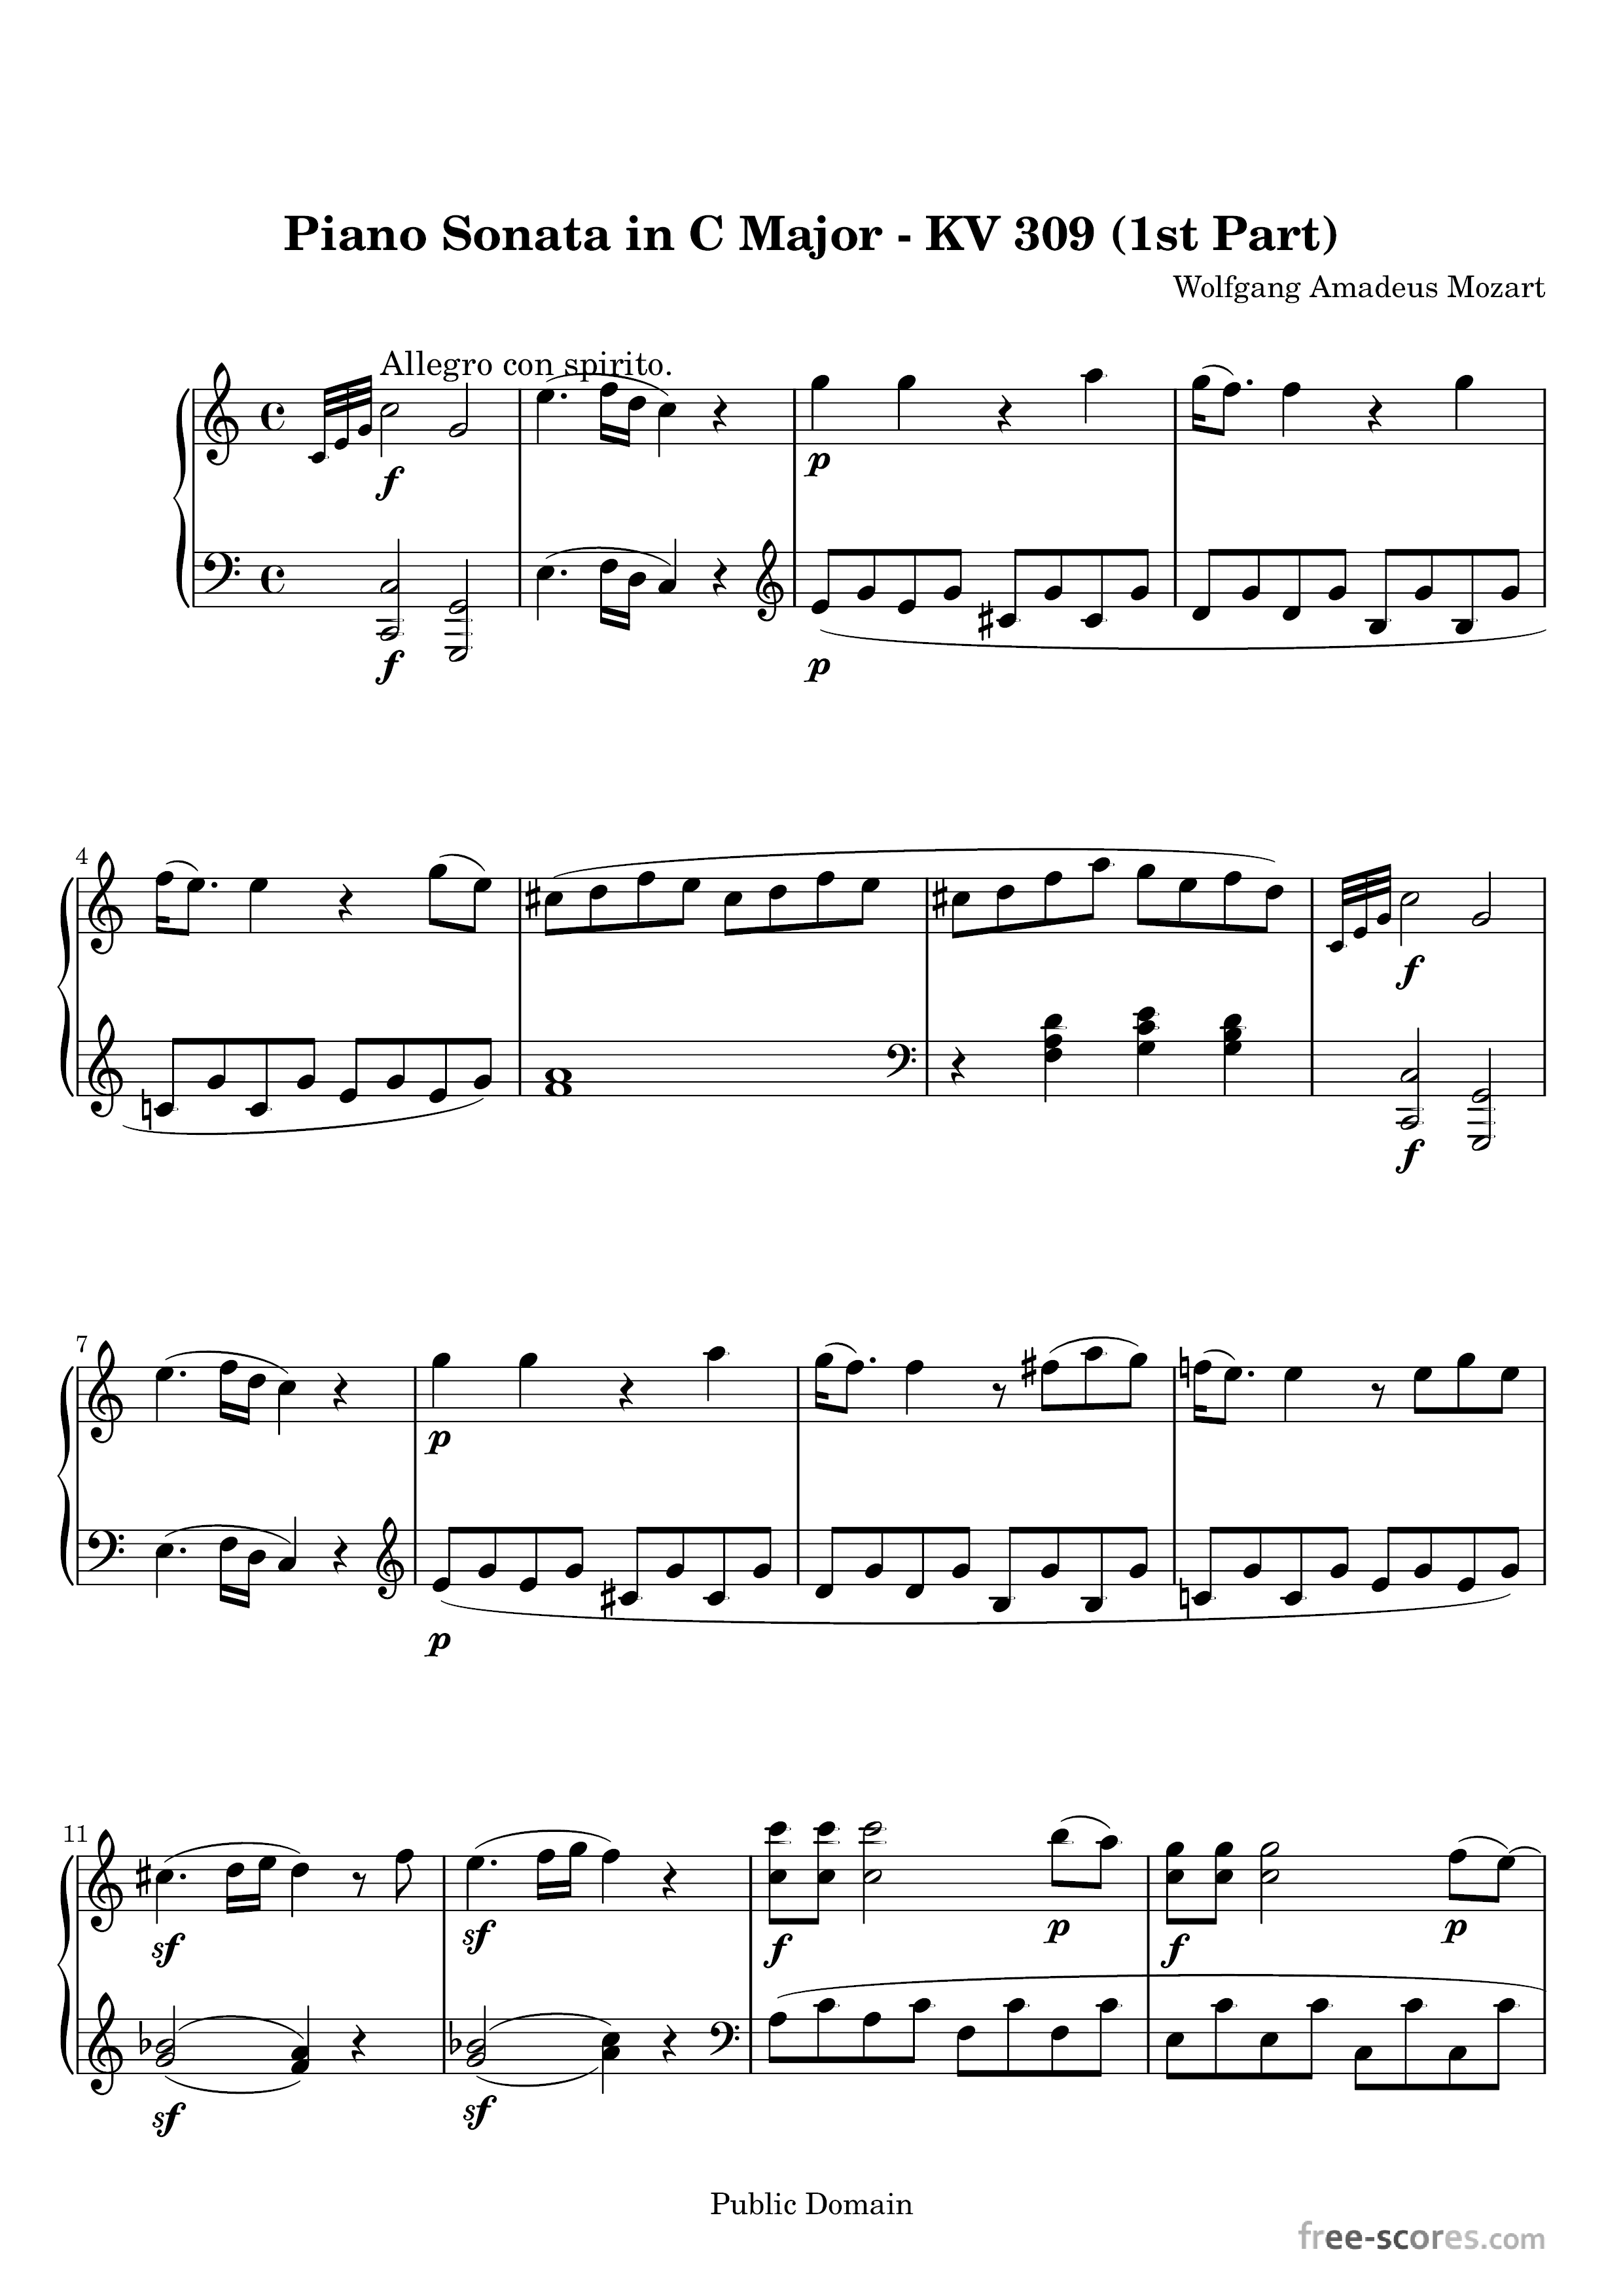 Piano Sonata in C Major - KV 309 (1st Part) Score